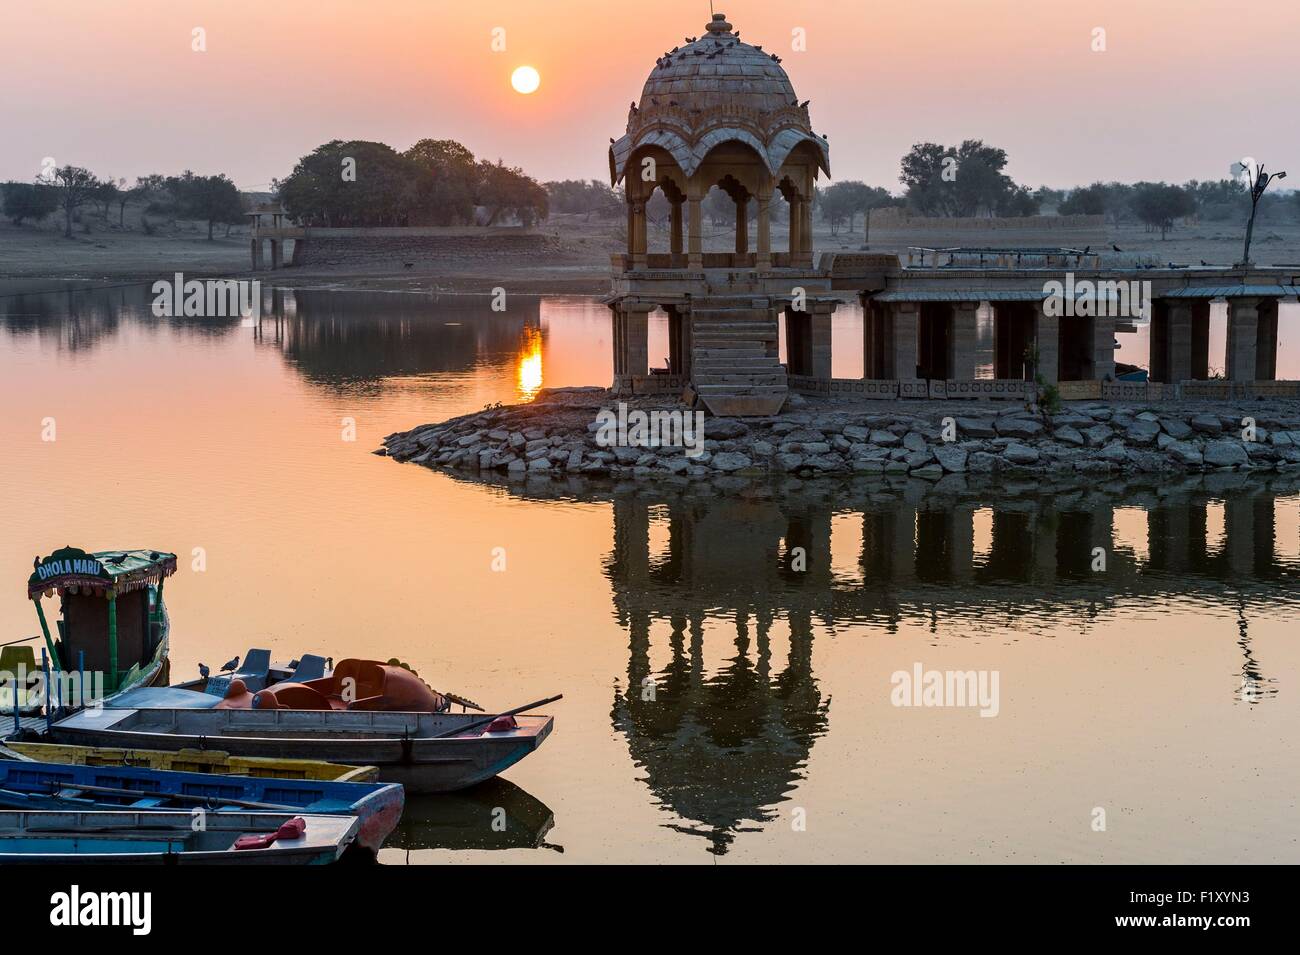 Indien, Rajasthan state, Jaisalmer, der Gadi Sadar Tank im 13. Jahrhundert erbaut wurde Stockfoto